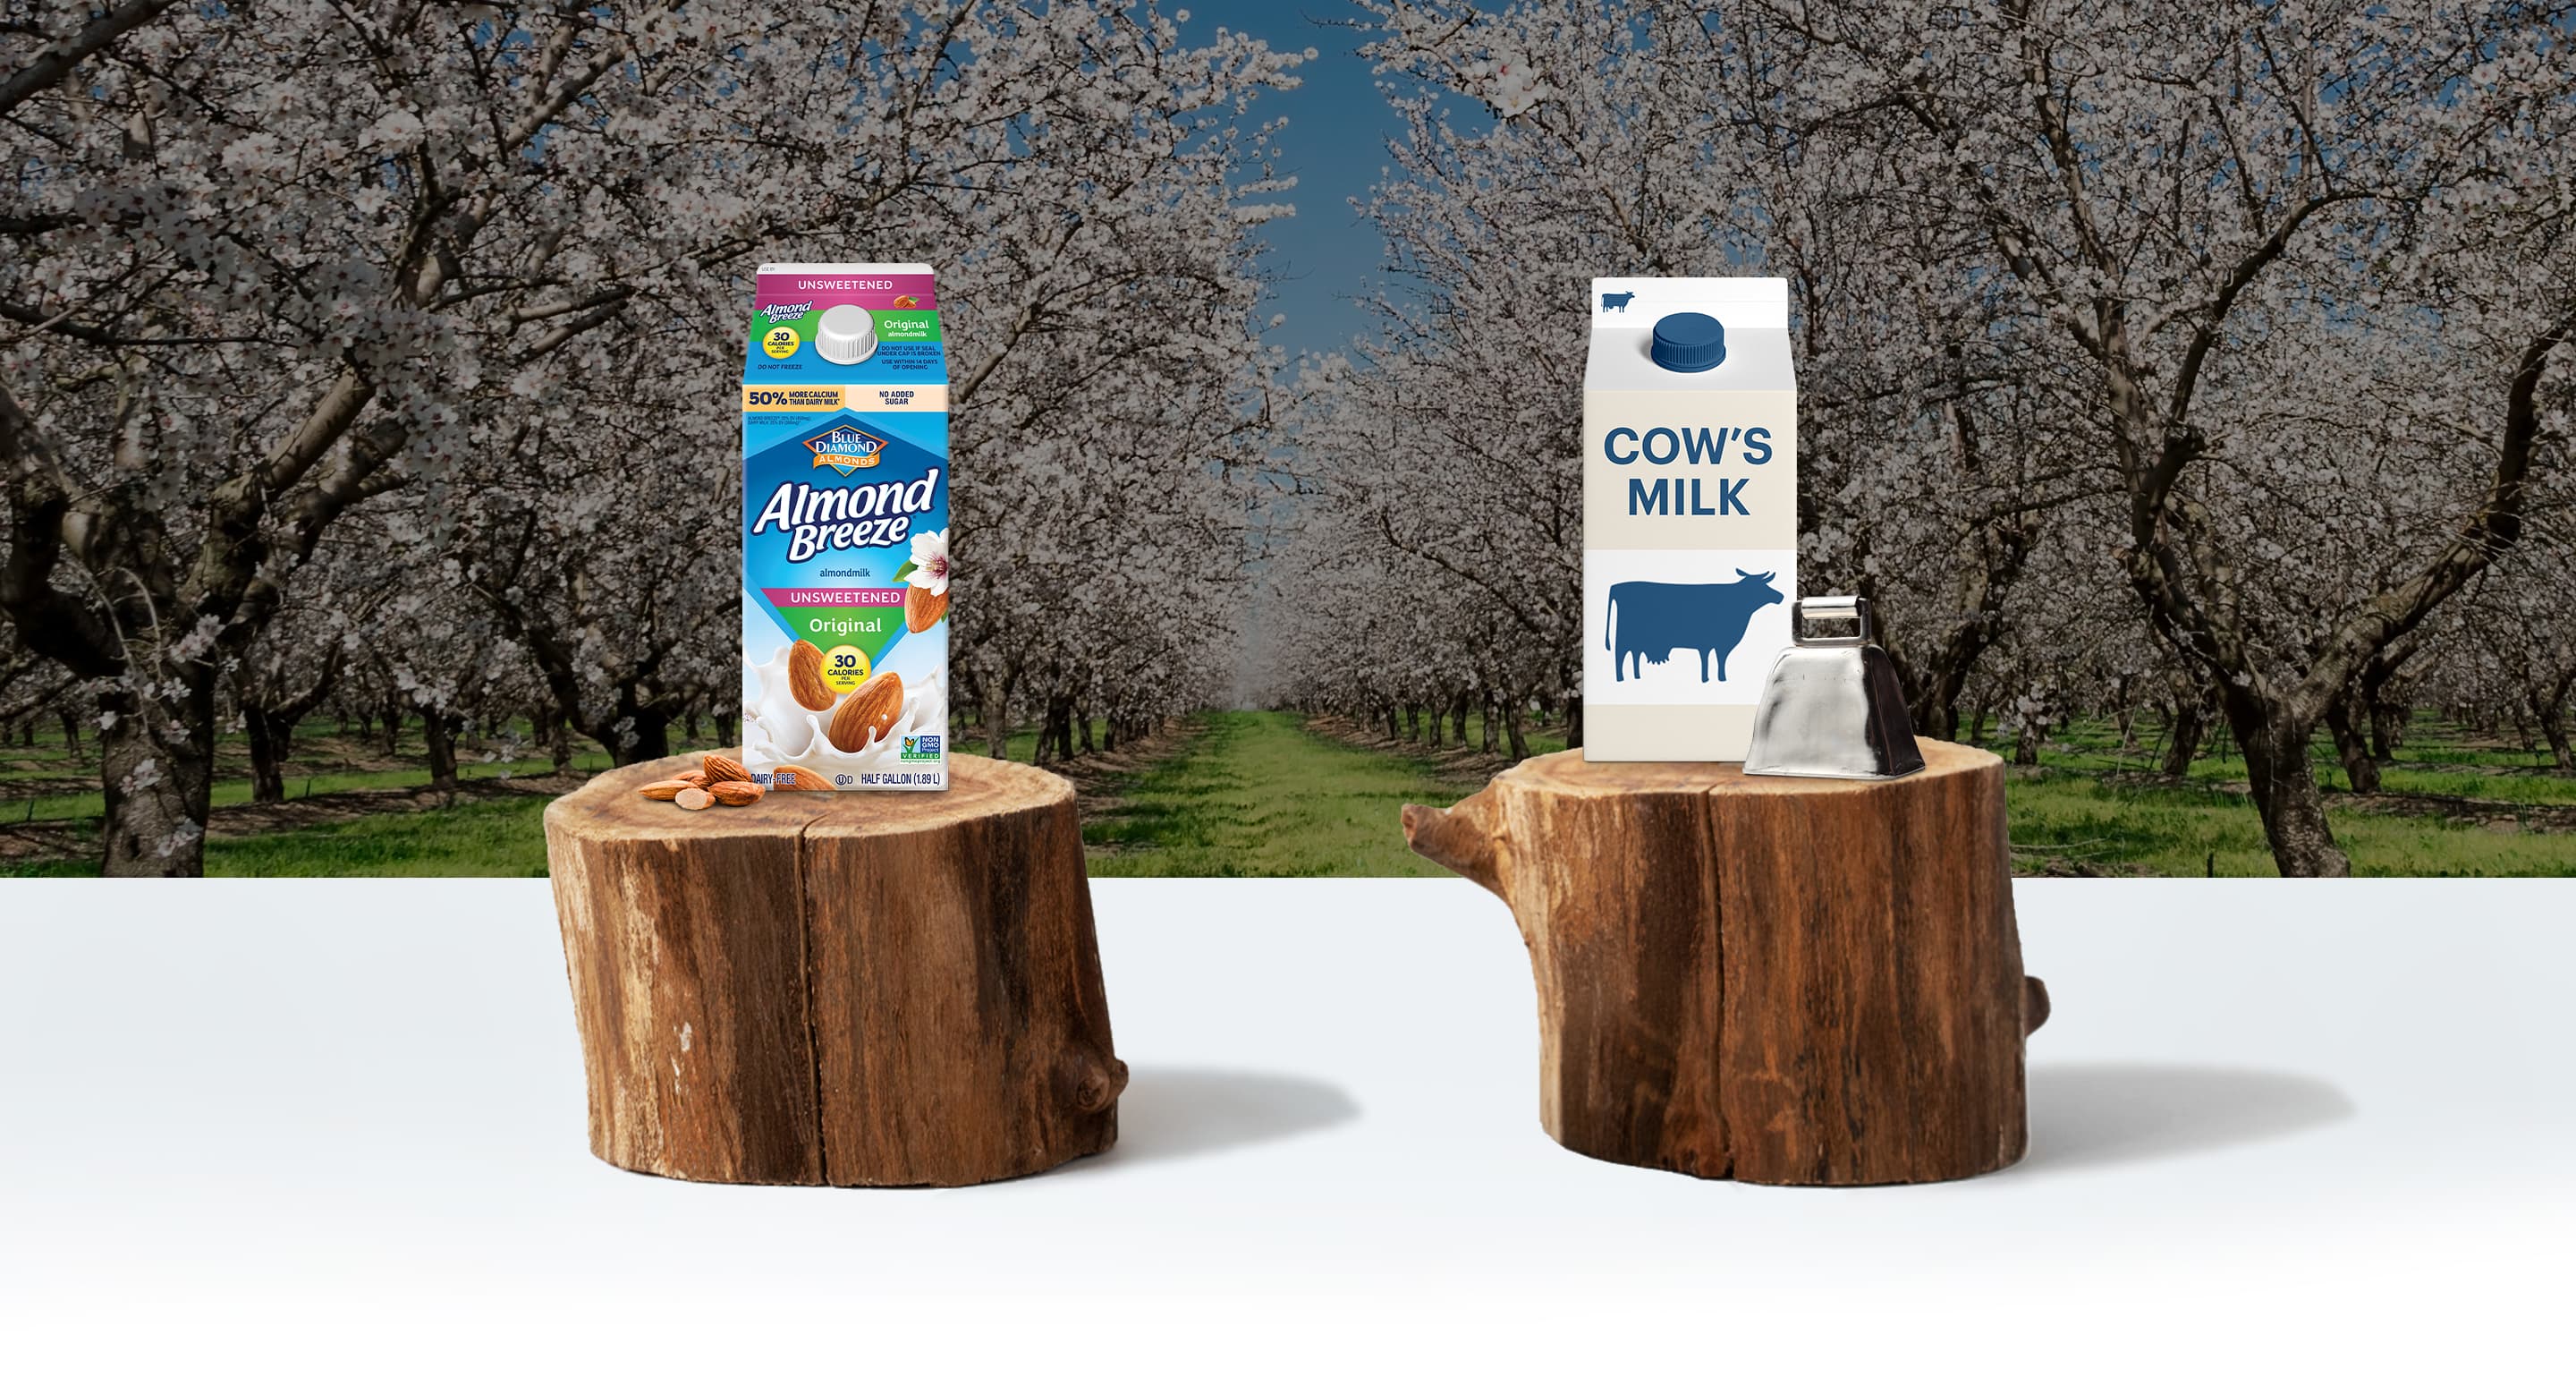 Almond milk and dairy milk cartons on tree stumps